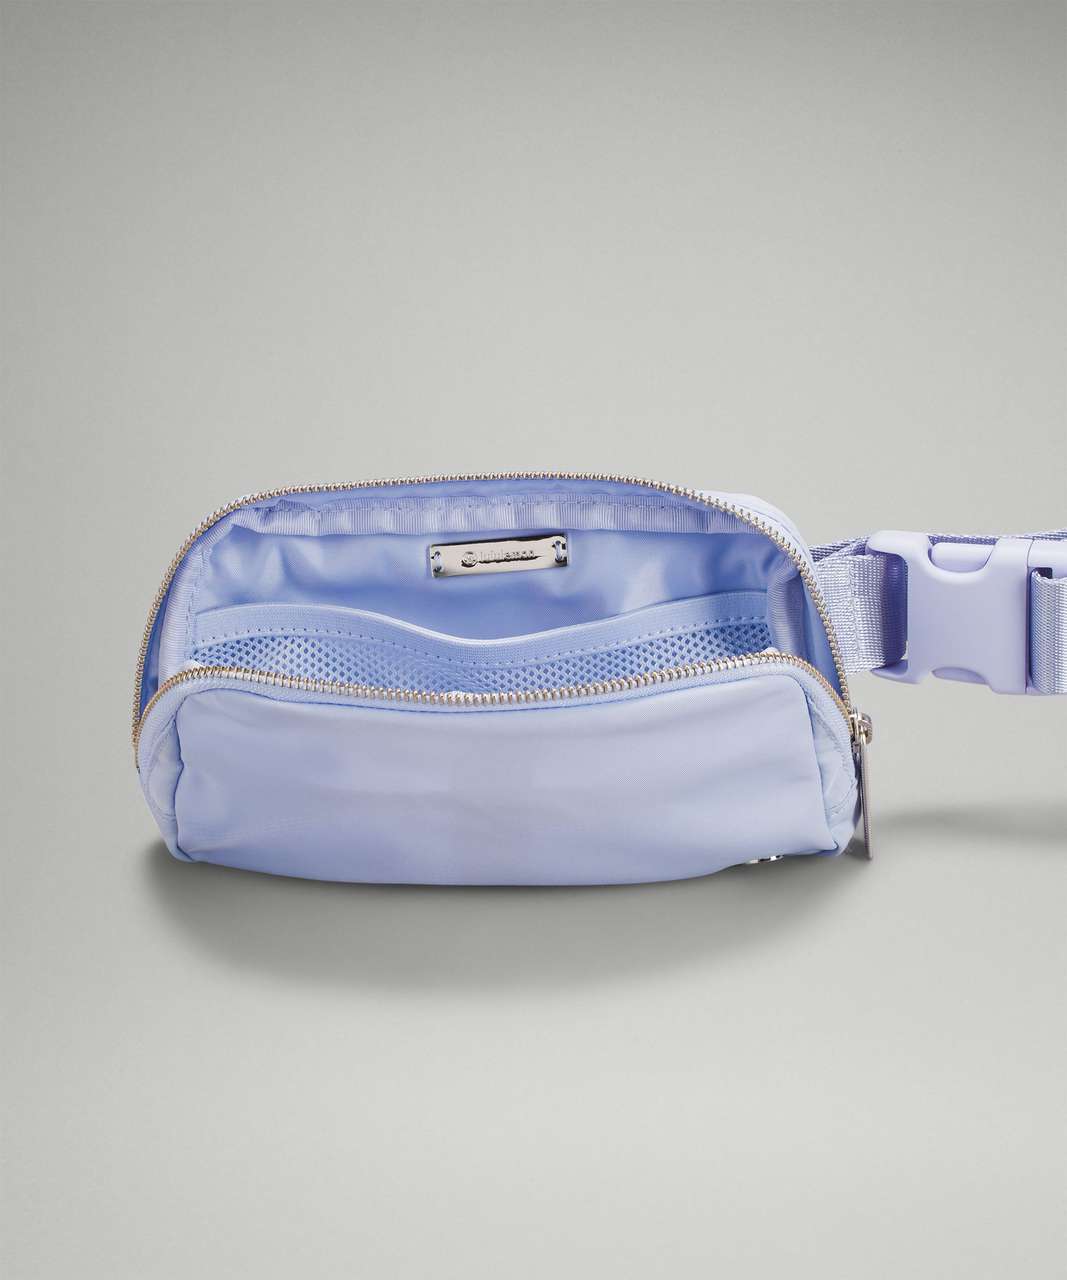 Lululemon Everywhere Belt Bag - Pastel Blue